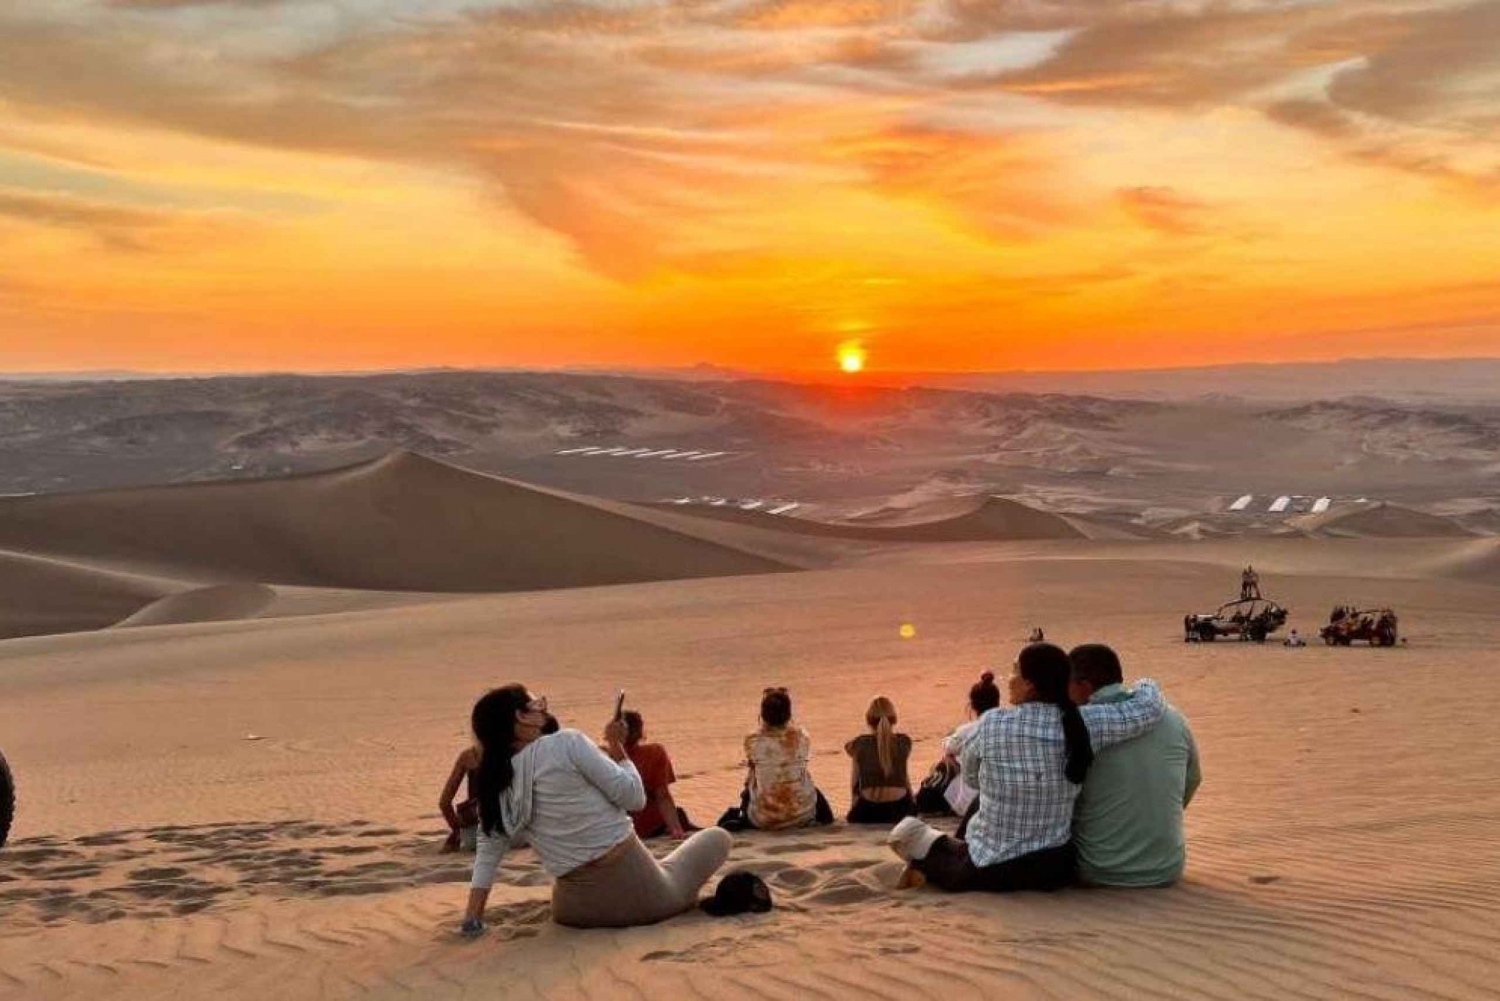 Icasta: Ica: Dune Buggy at Sunset & Sandoboarding